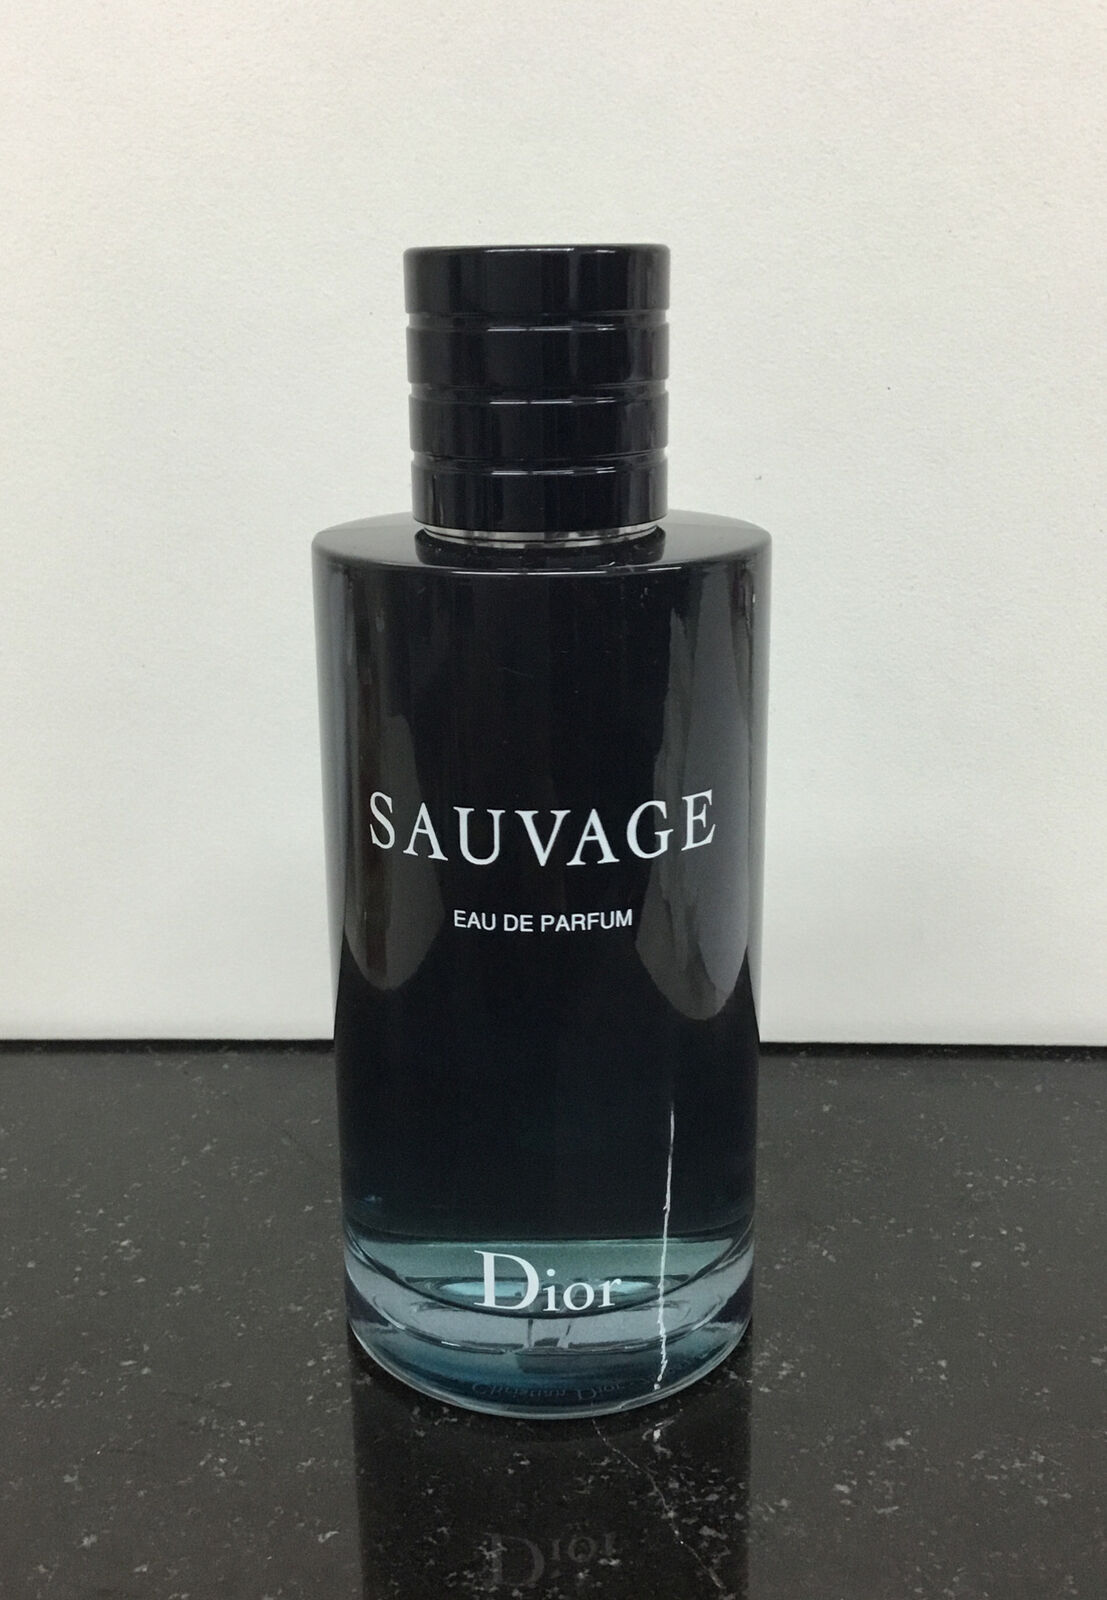 Dior Sauvage By Christian Dior Eau De Parfum Spray 6.8 Fl Oz, As Pictured.